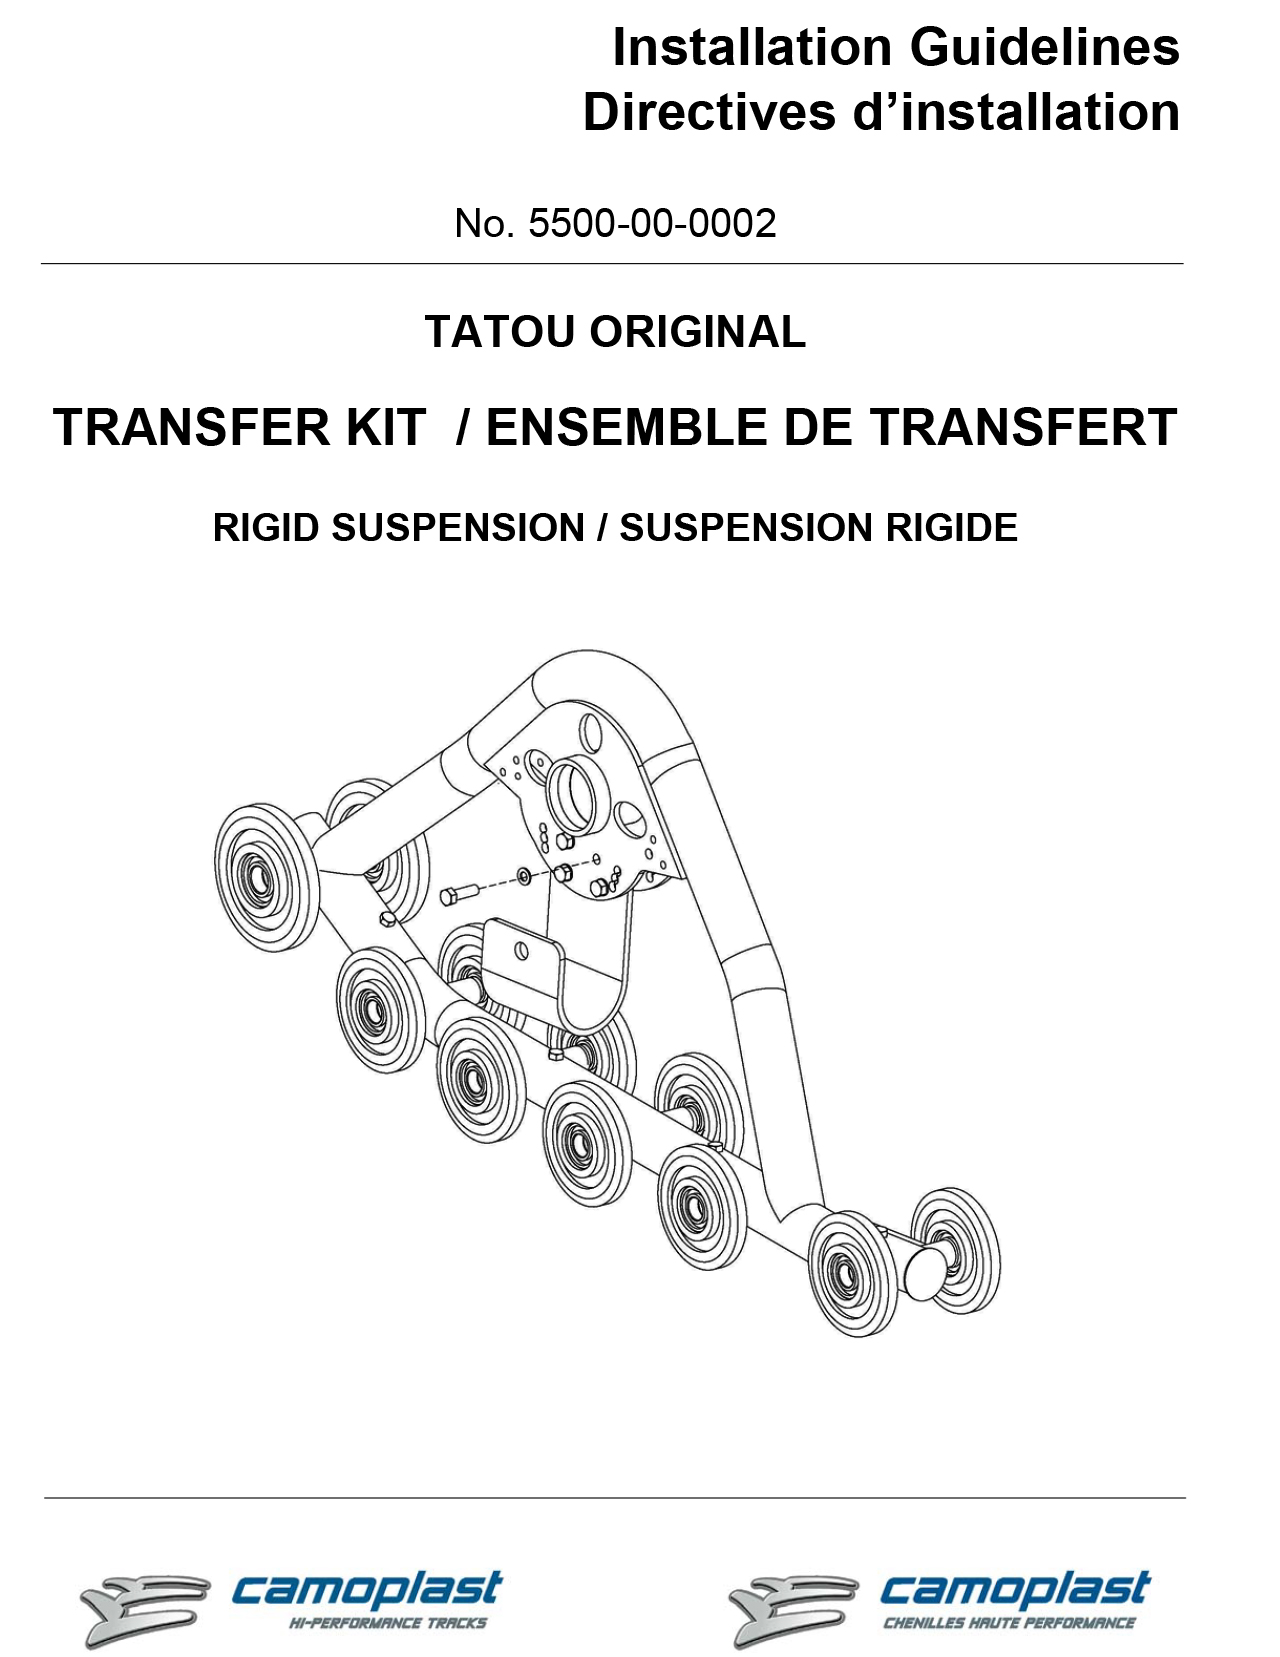 Camoplast Tatou Original Solid Axle Suspension ATV Tracks Transfer Kit